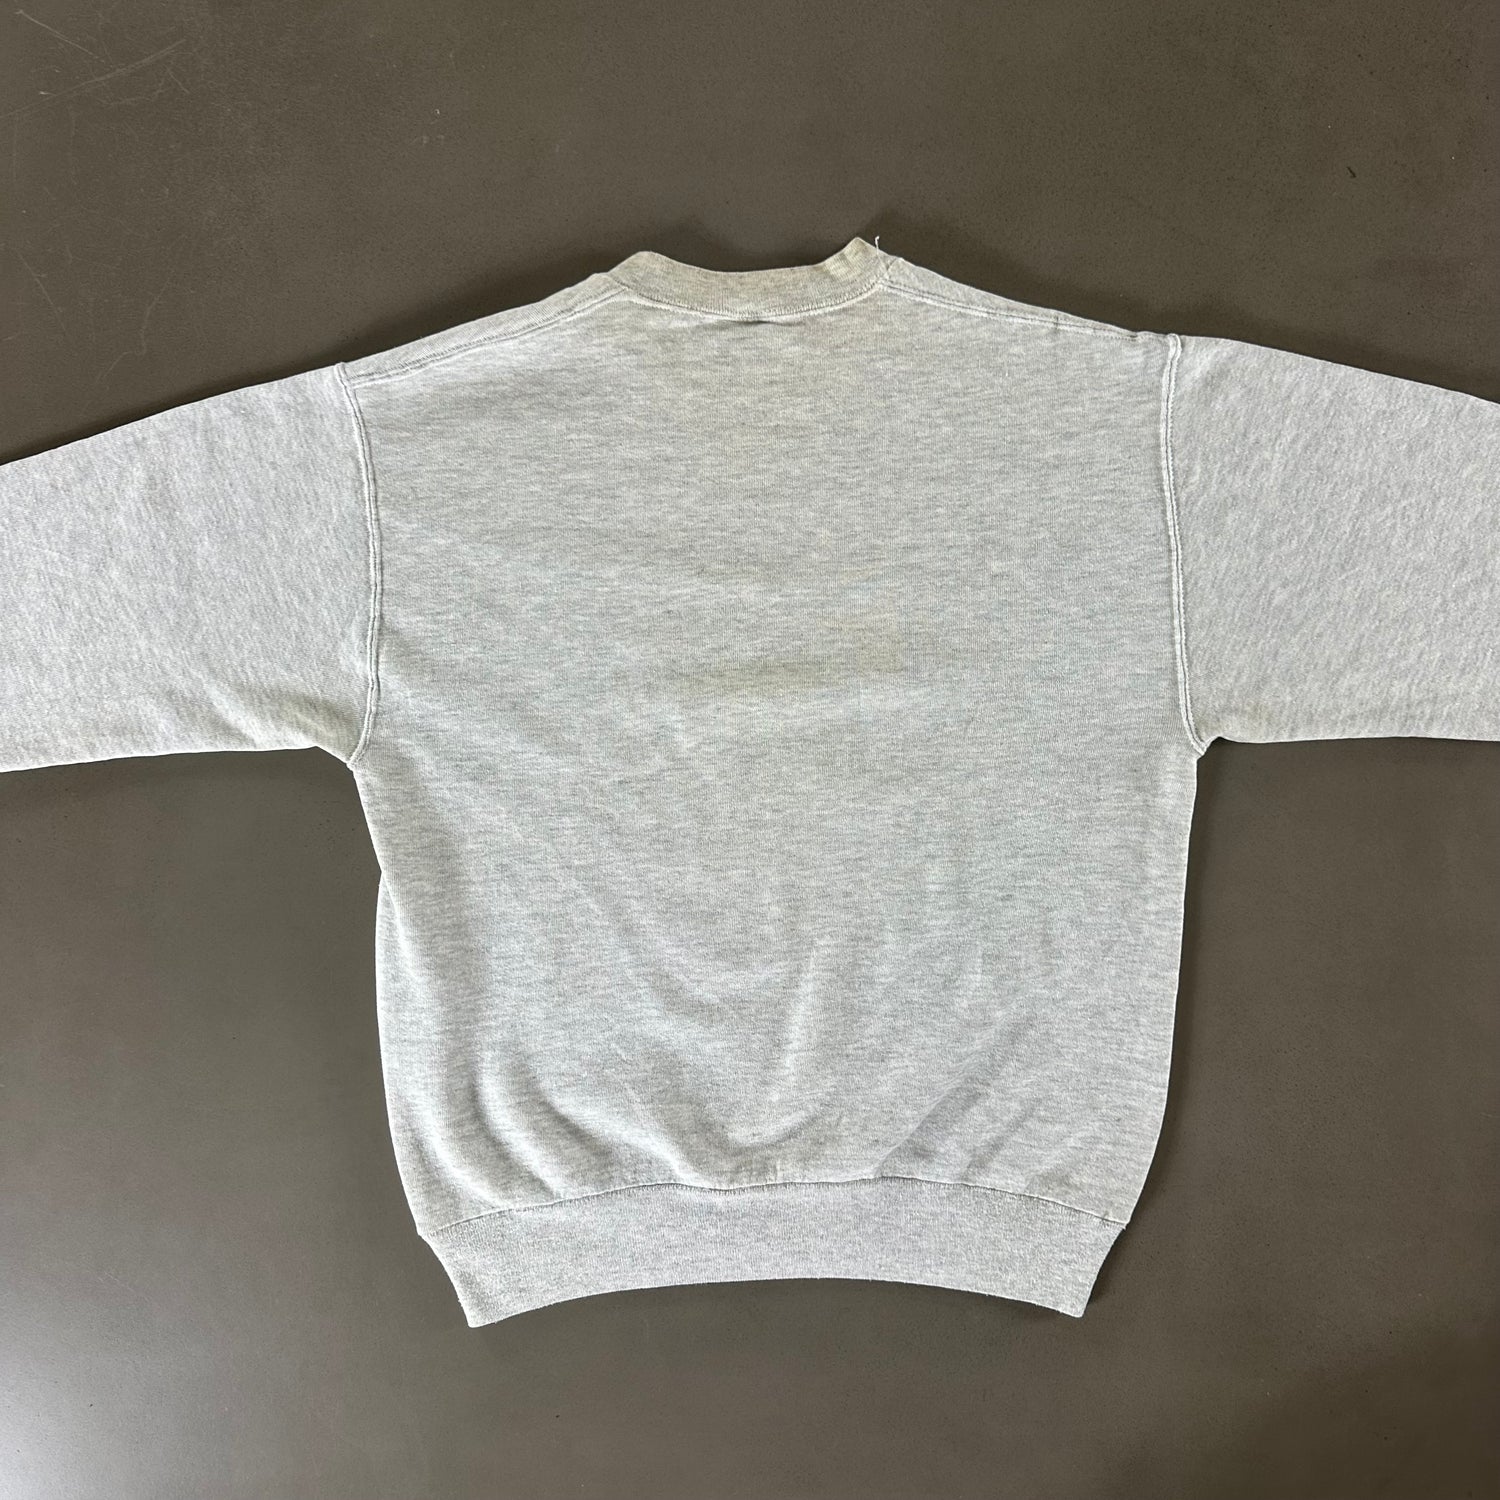 Vintage 1992 Arizona Sweatshirt size Large